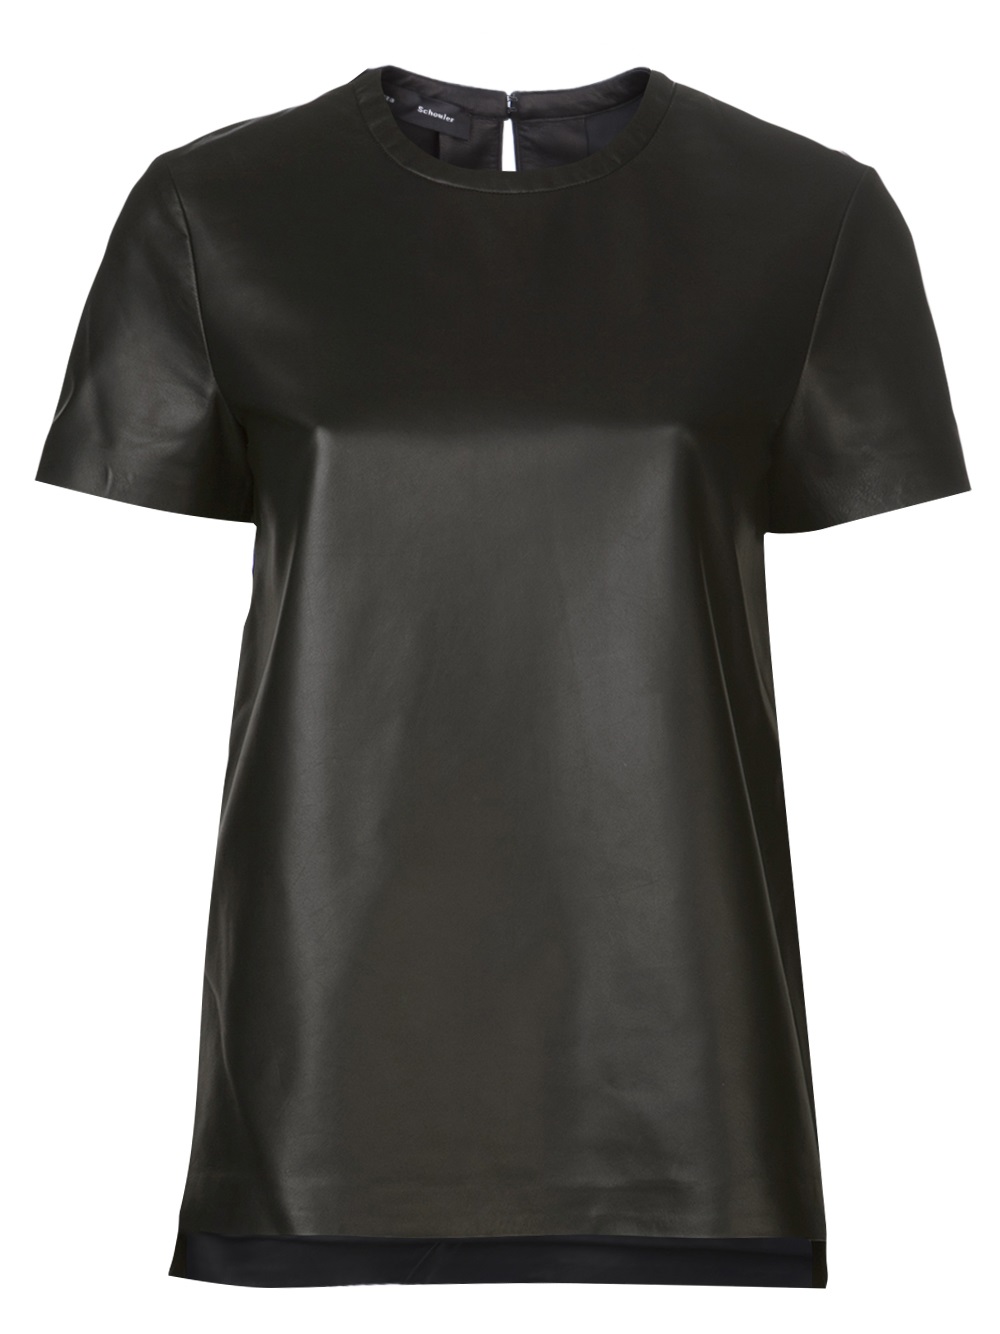 Proenza Schouler Leather Short Sleeve Tshirt in Black | Lyst